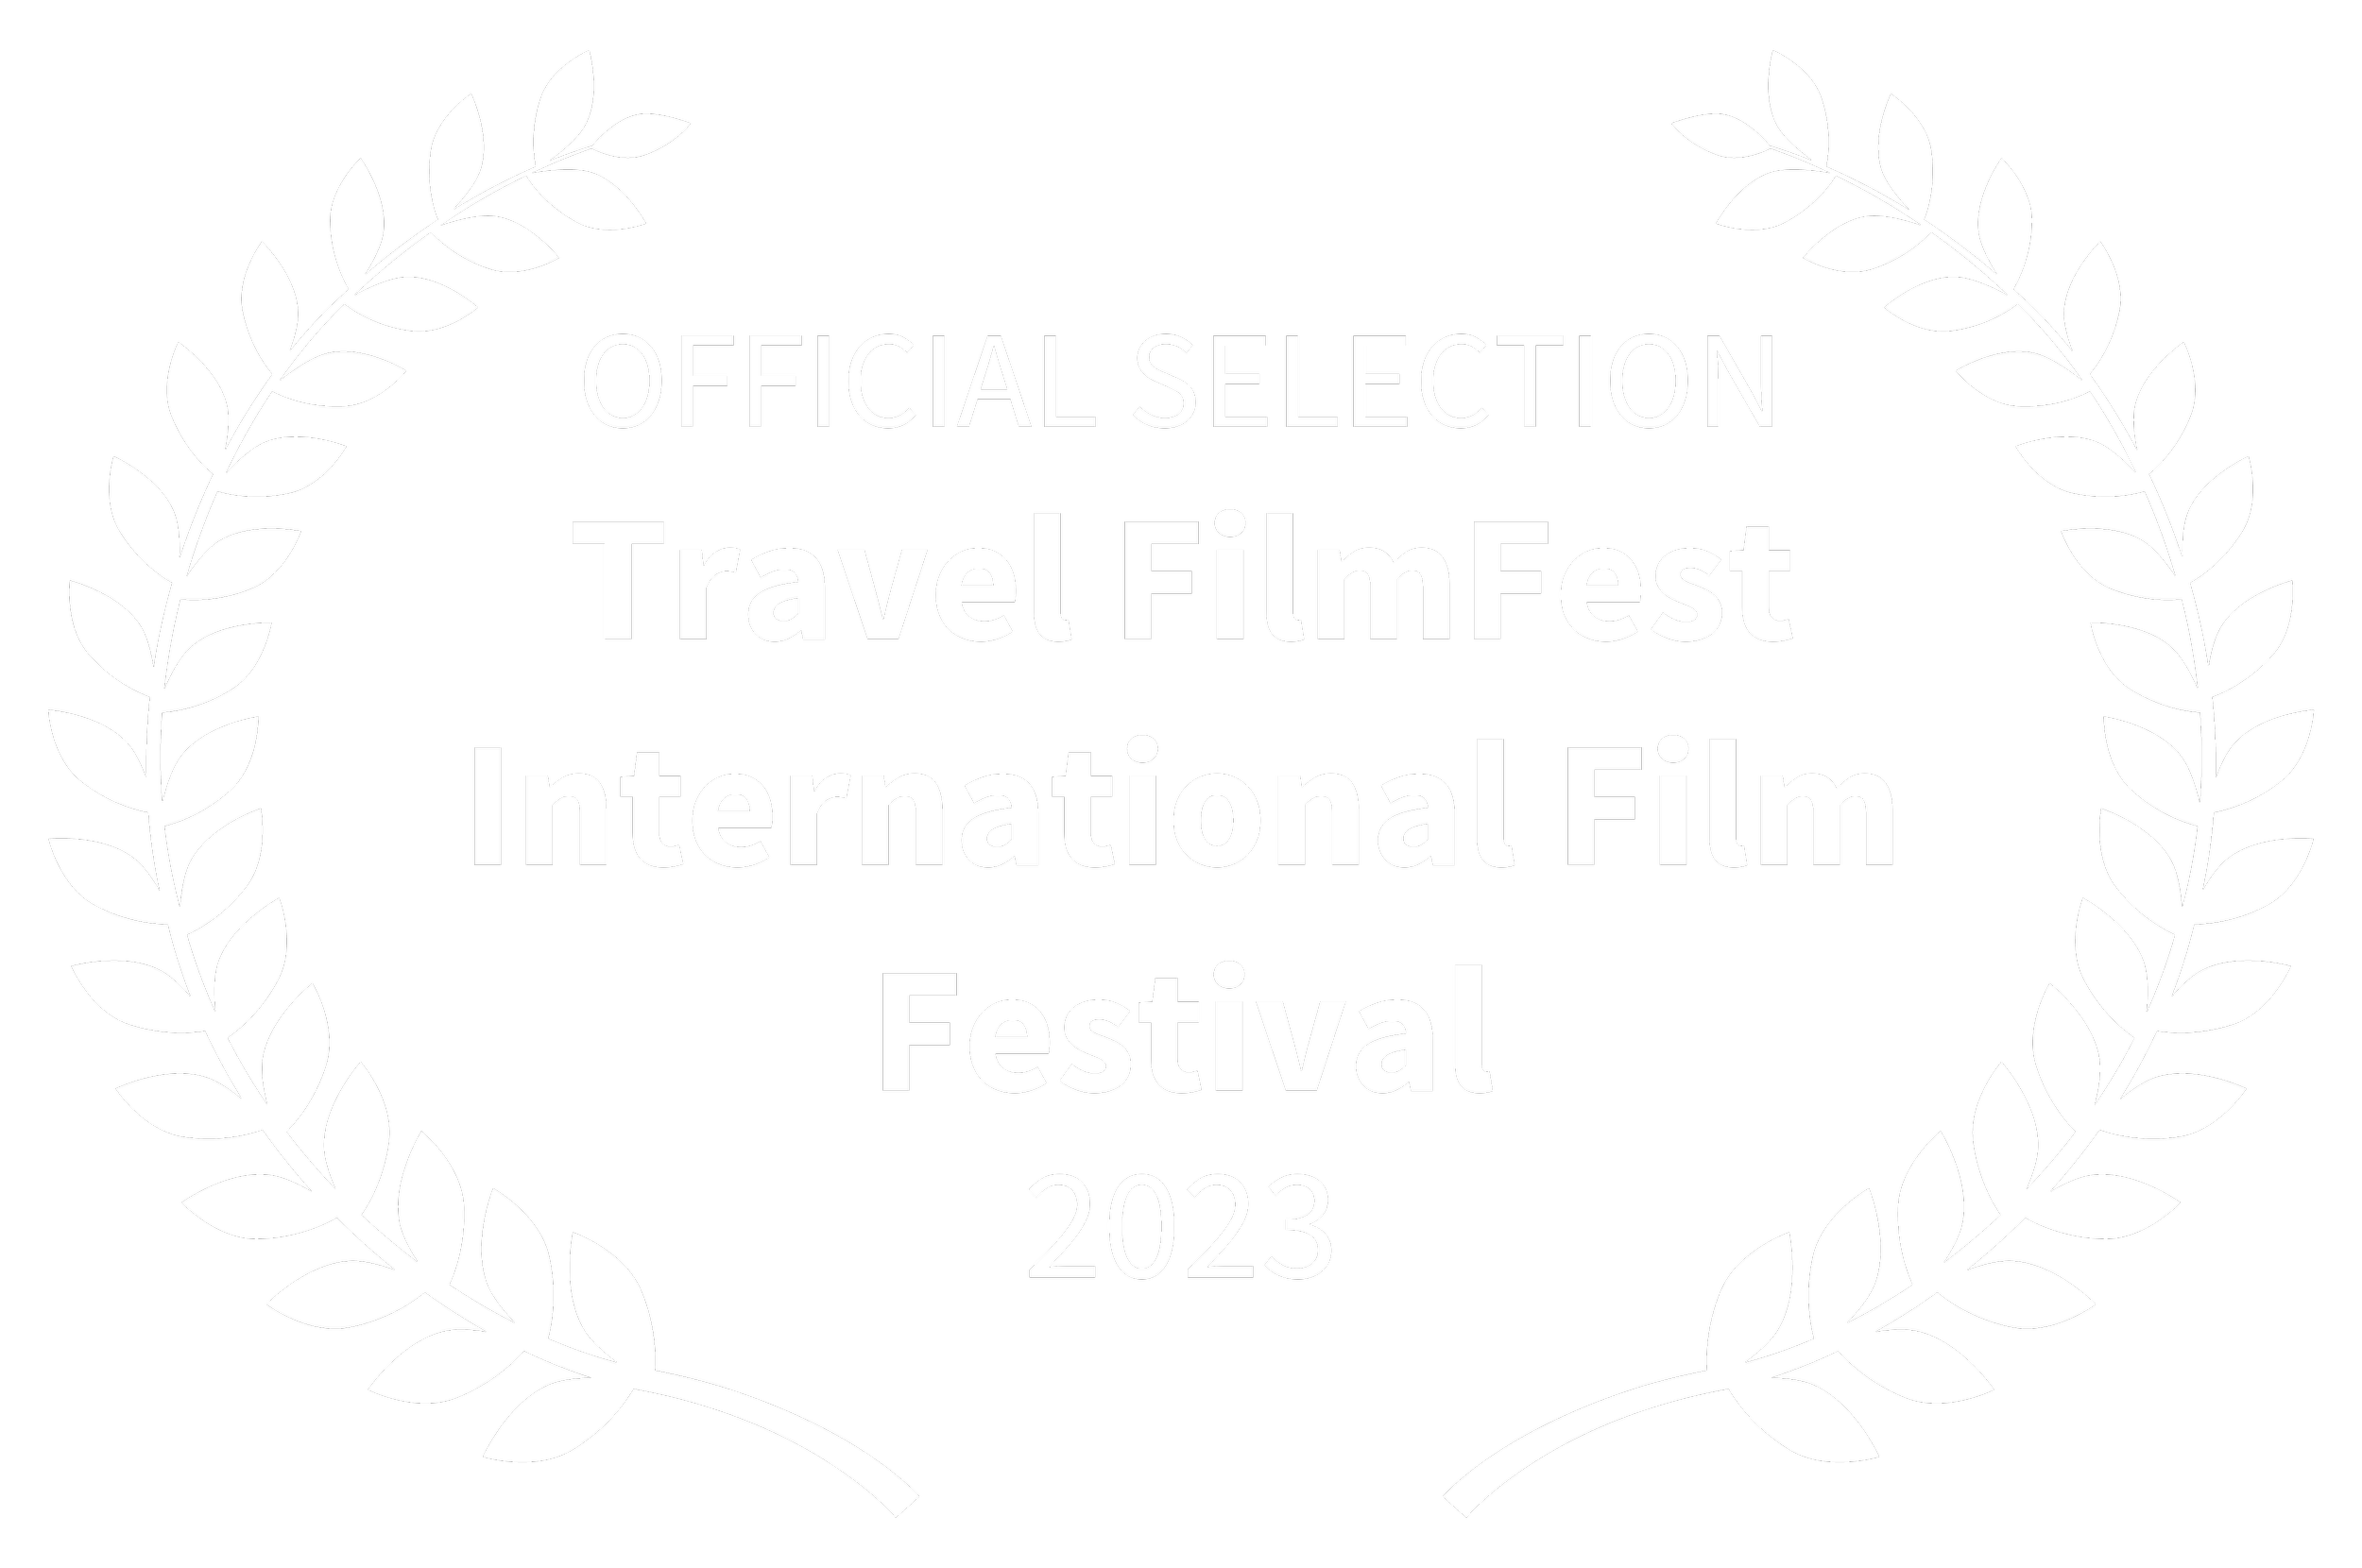 OFFICIALSELECTION-TravelFilmFestInternationalFilmFestival-2023 (1).png